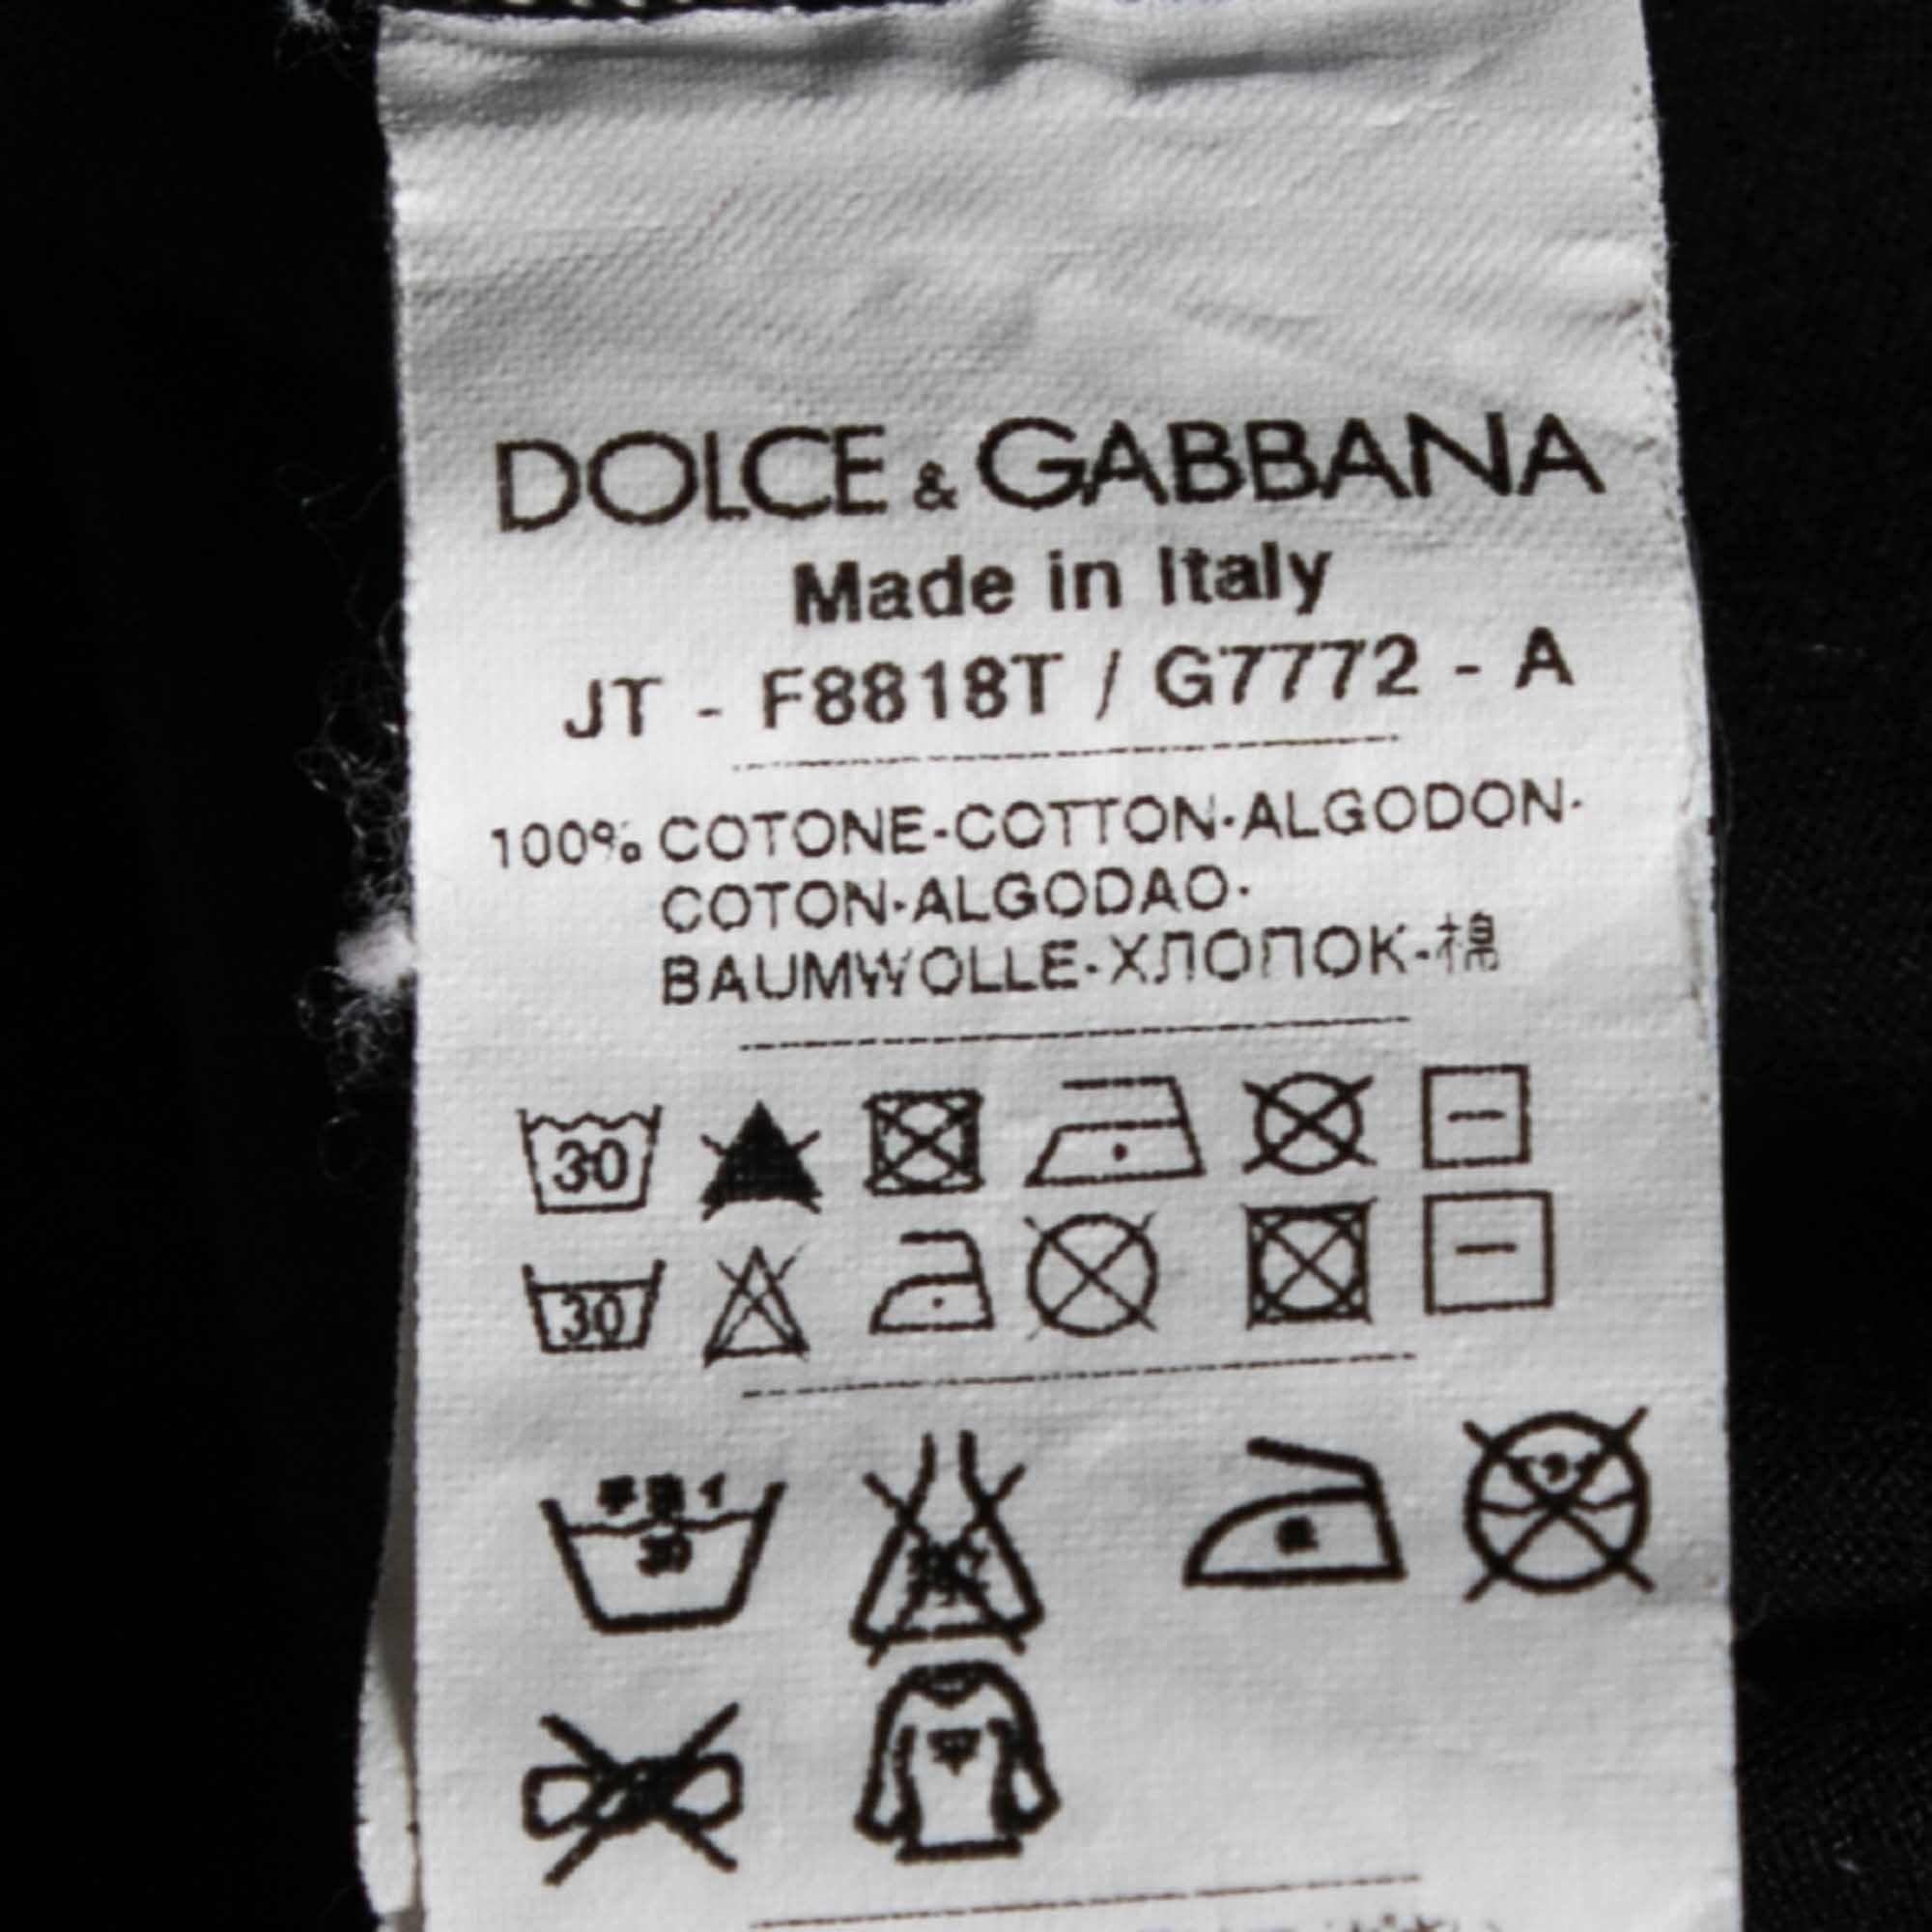 Dolce & Gabbana Black Cotton James Dean Printed T-Shirt S